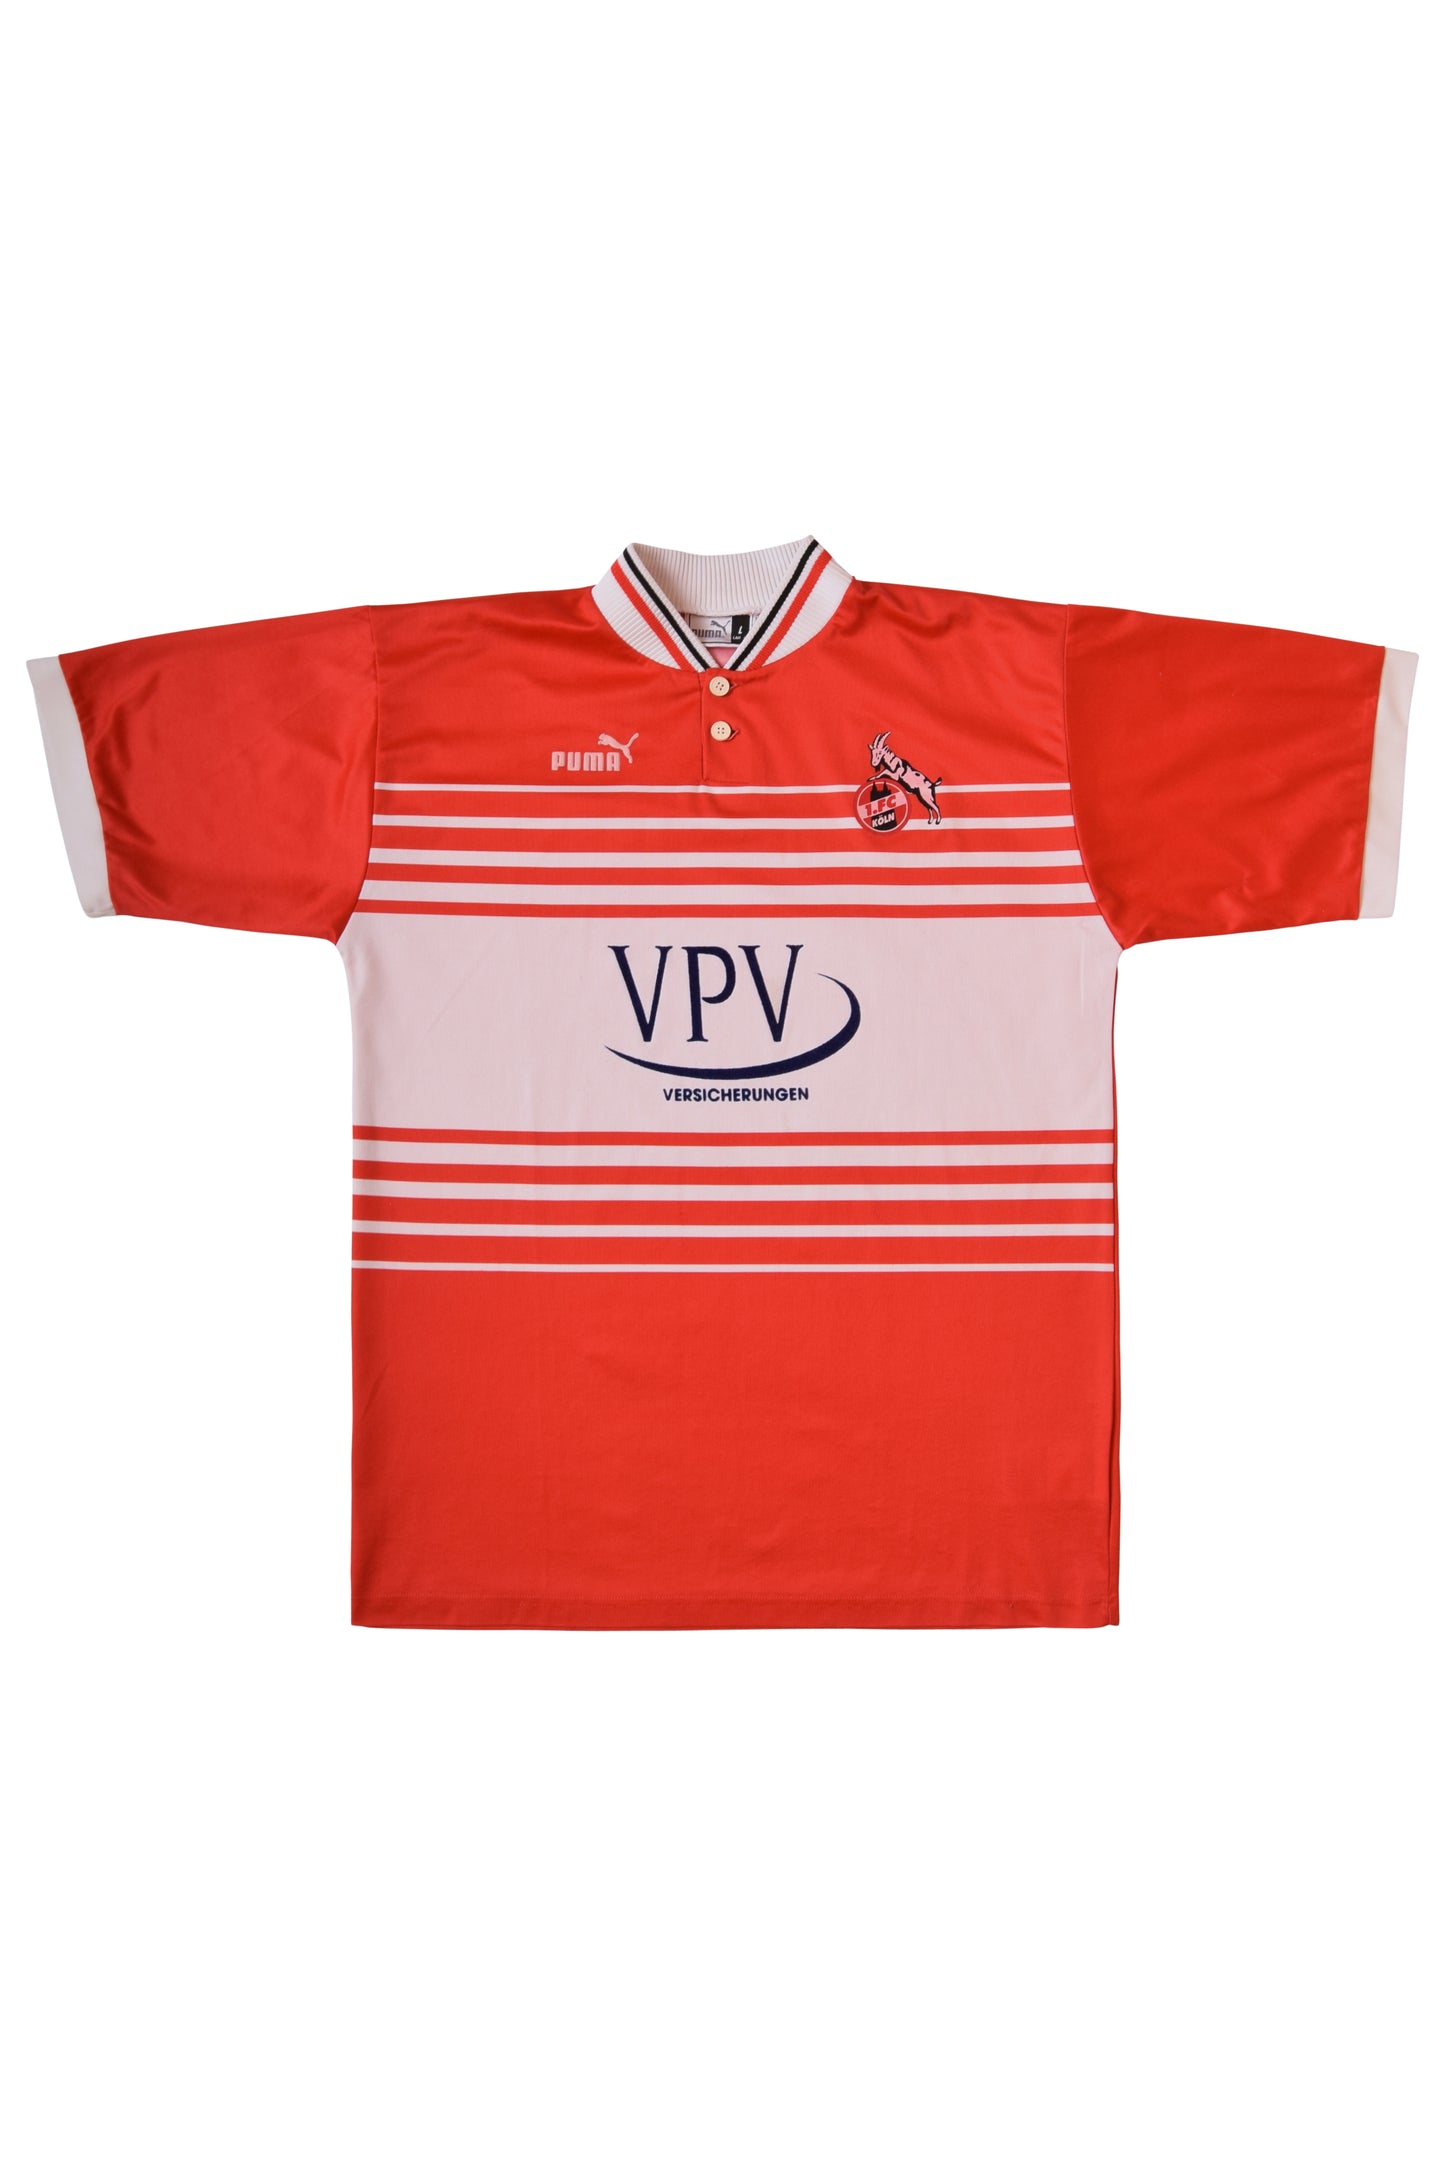 Vintage FC Koln Puma Home Football Shirt '99-'00 Size L